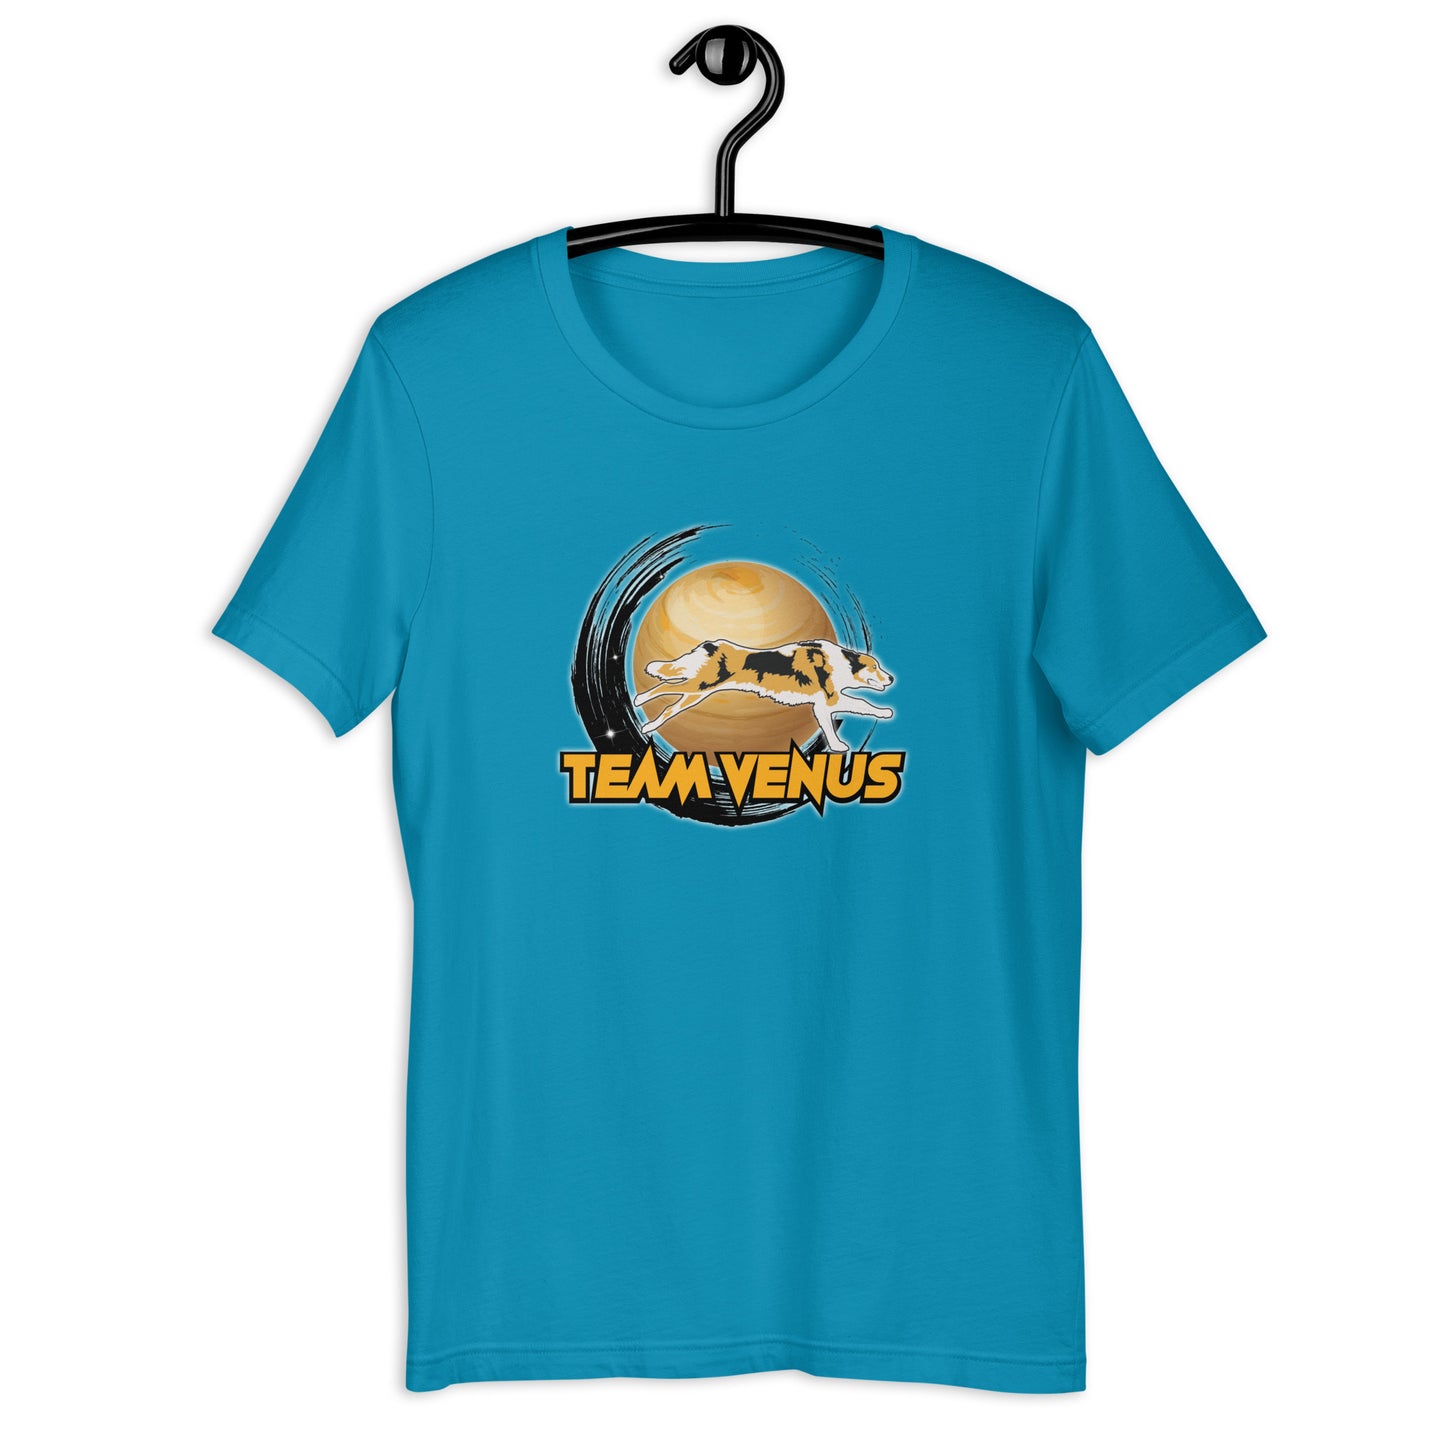 TEAM VENUS - CUSTOM - Unisex t-shirt